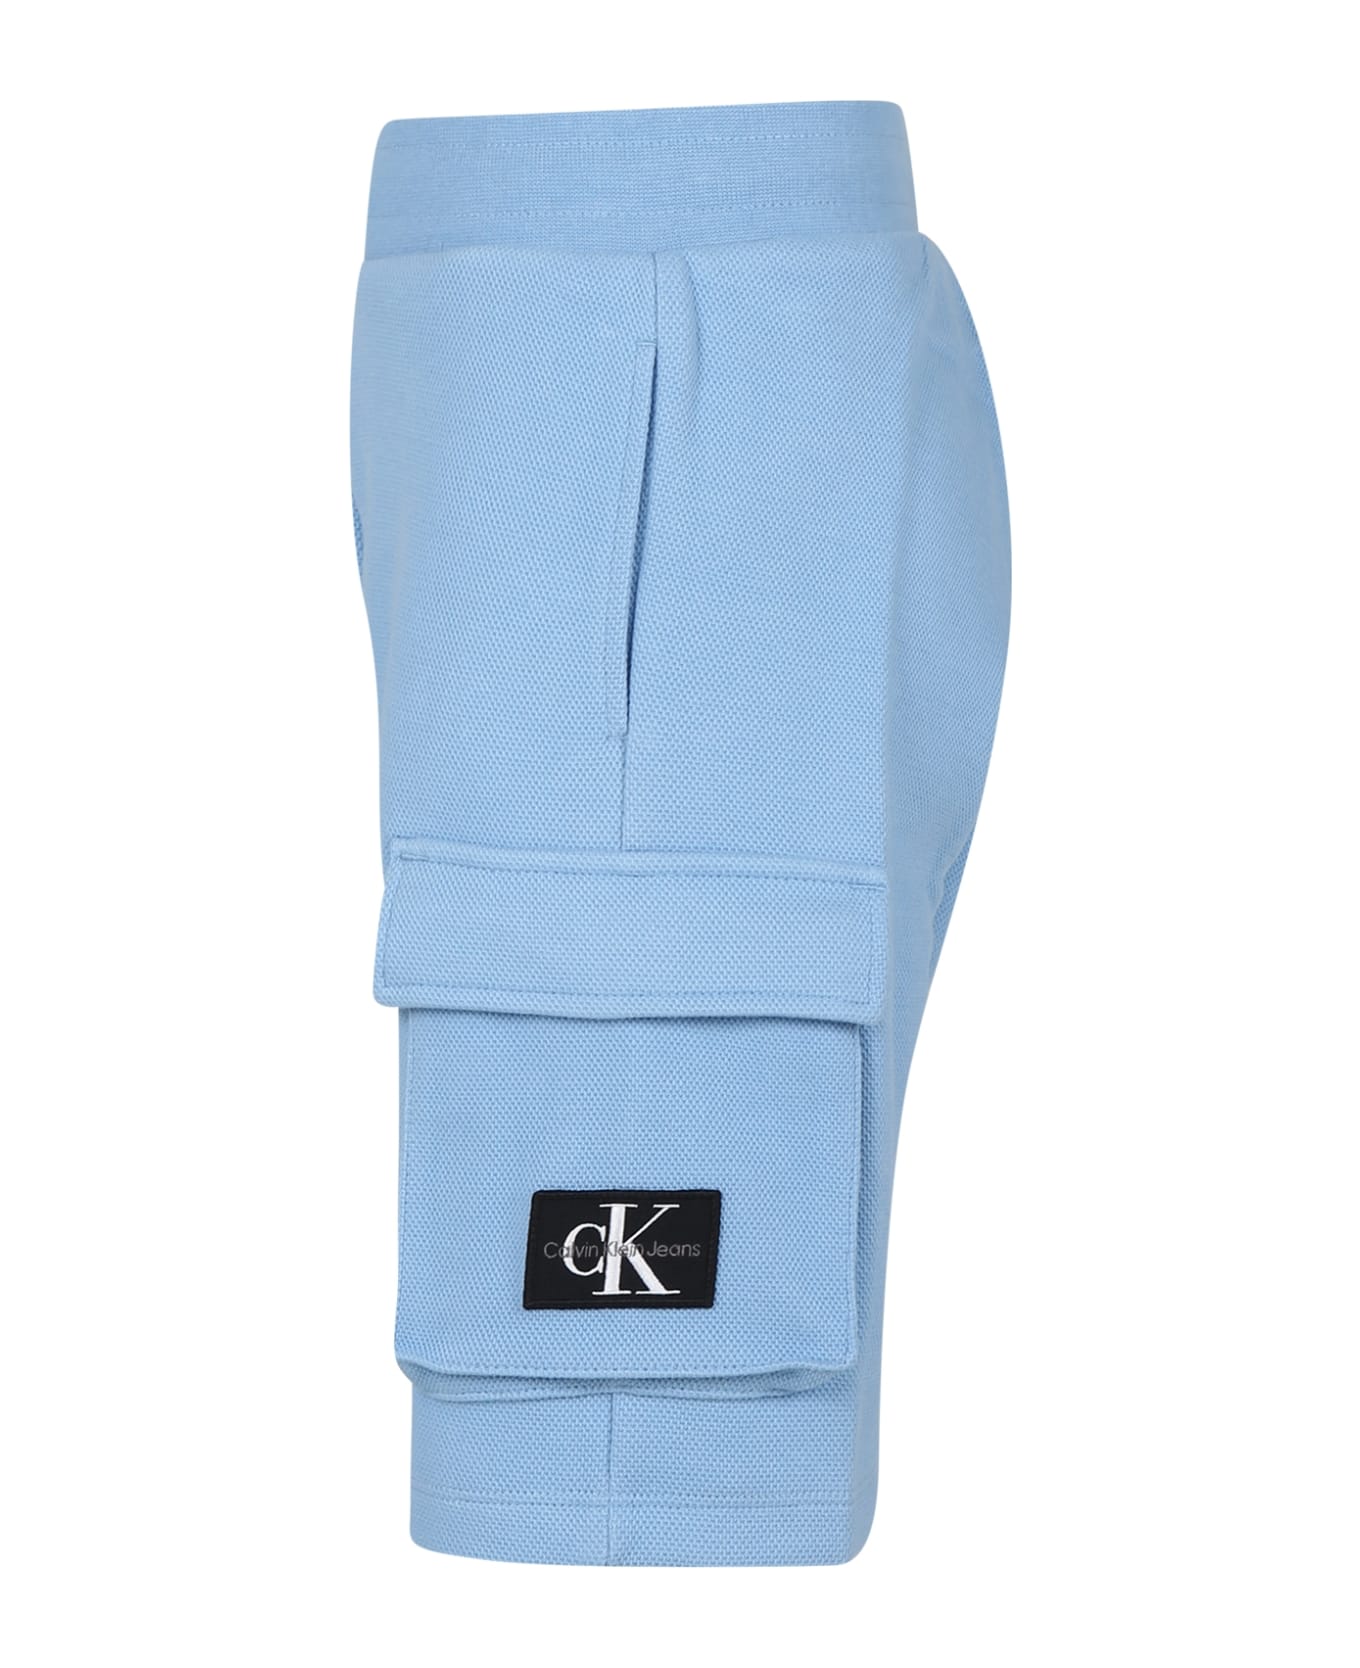 Calvin Klein Light Blue Shorts For Boy With Logo - Light Blue